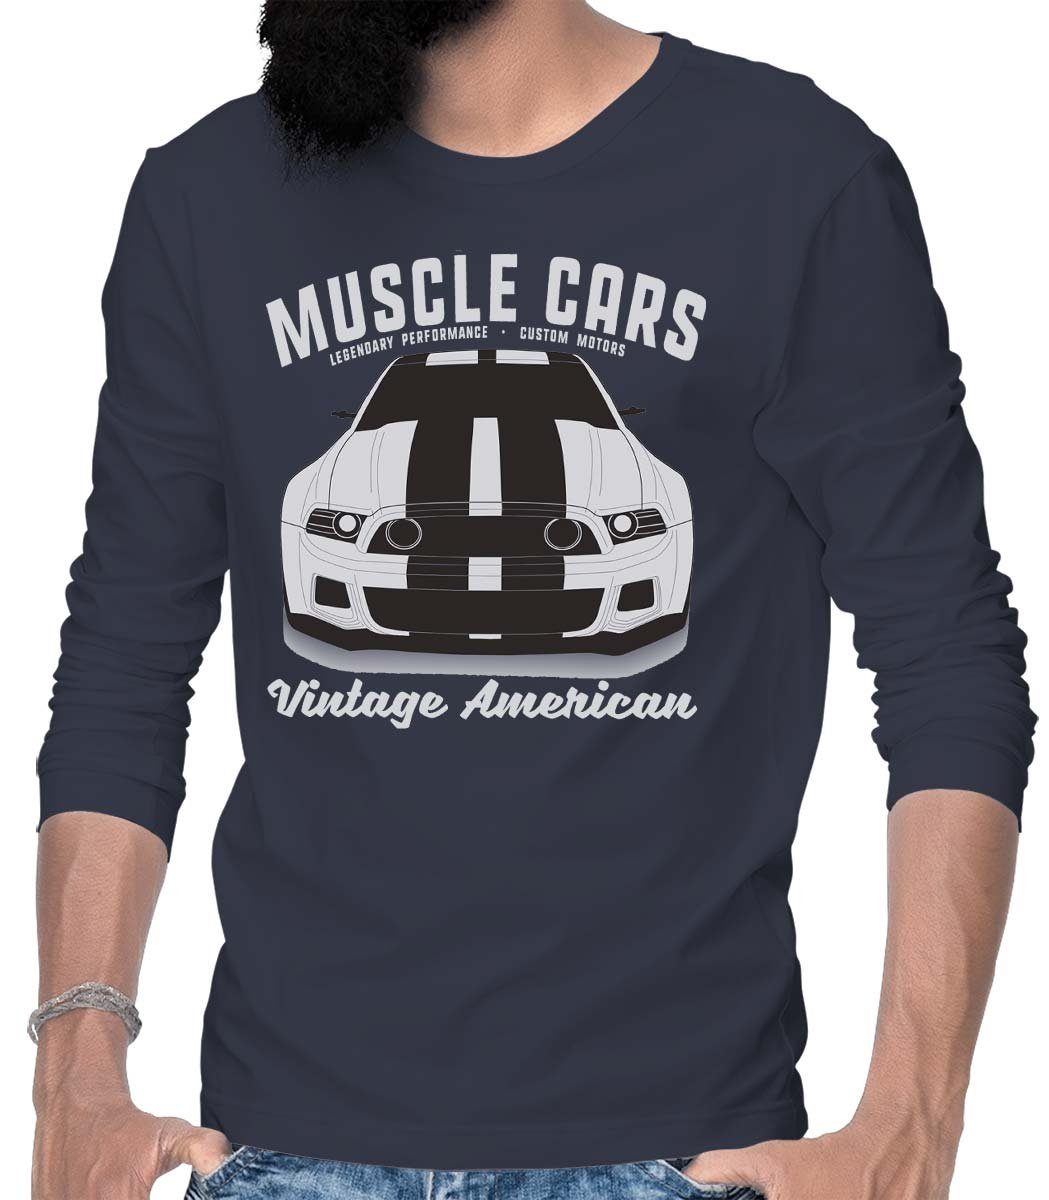 US-Car Langarm / Blau Us T-Shirt Herren On Auto Longsleeve Motiv Front Wheels Car mit Rebel